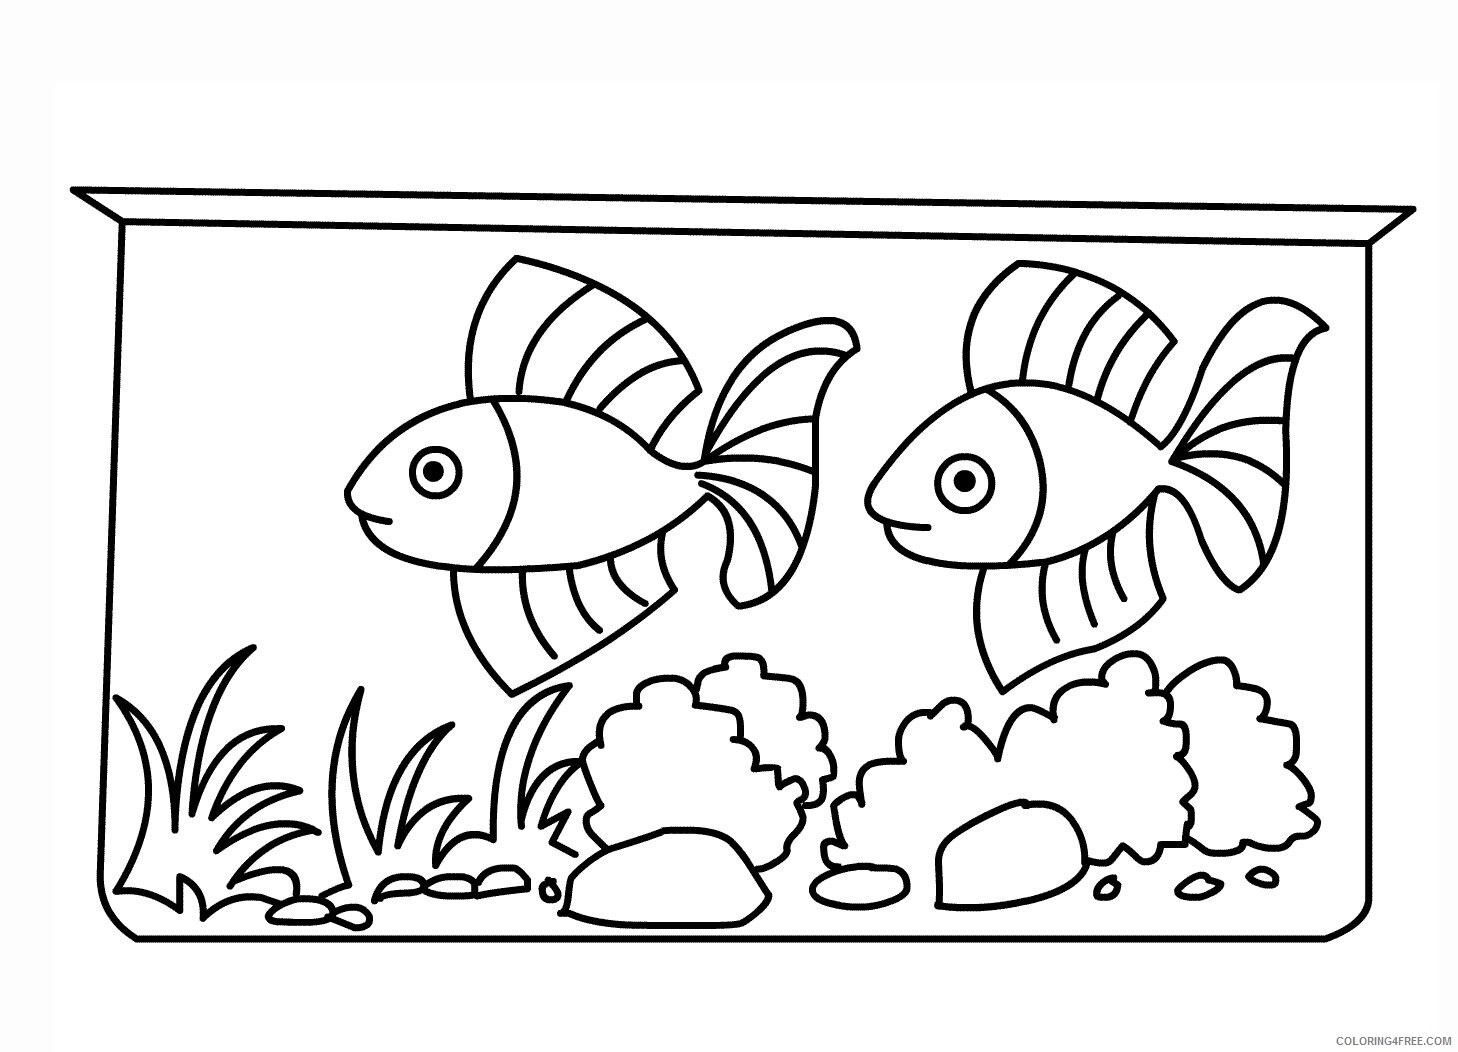 Aquarium Coloring Page Printable Sheets Toonpeps Free Aquarium coloring 2021 a 2253 Coloring4free